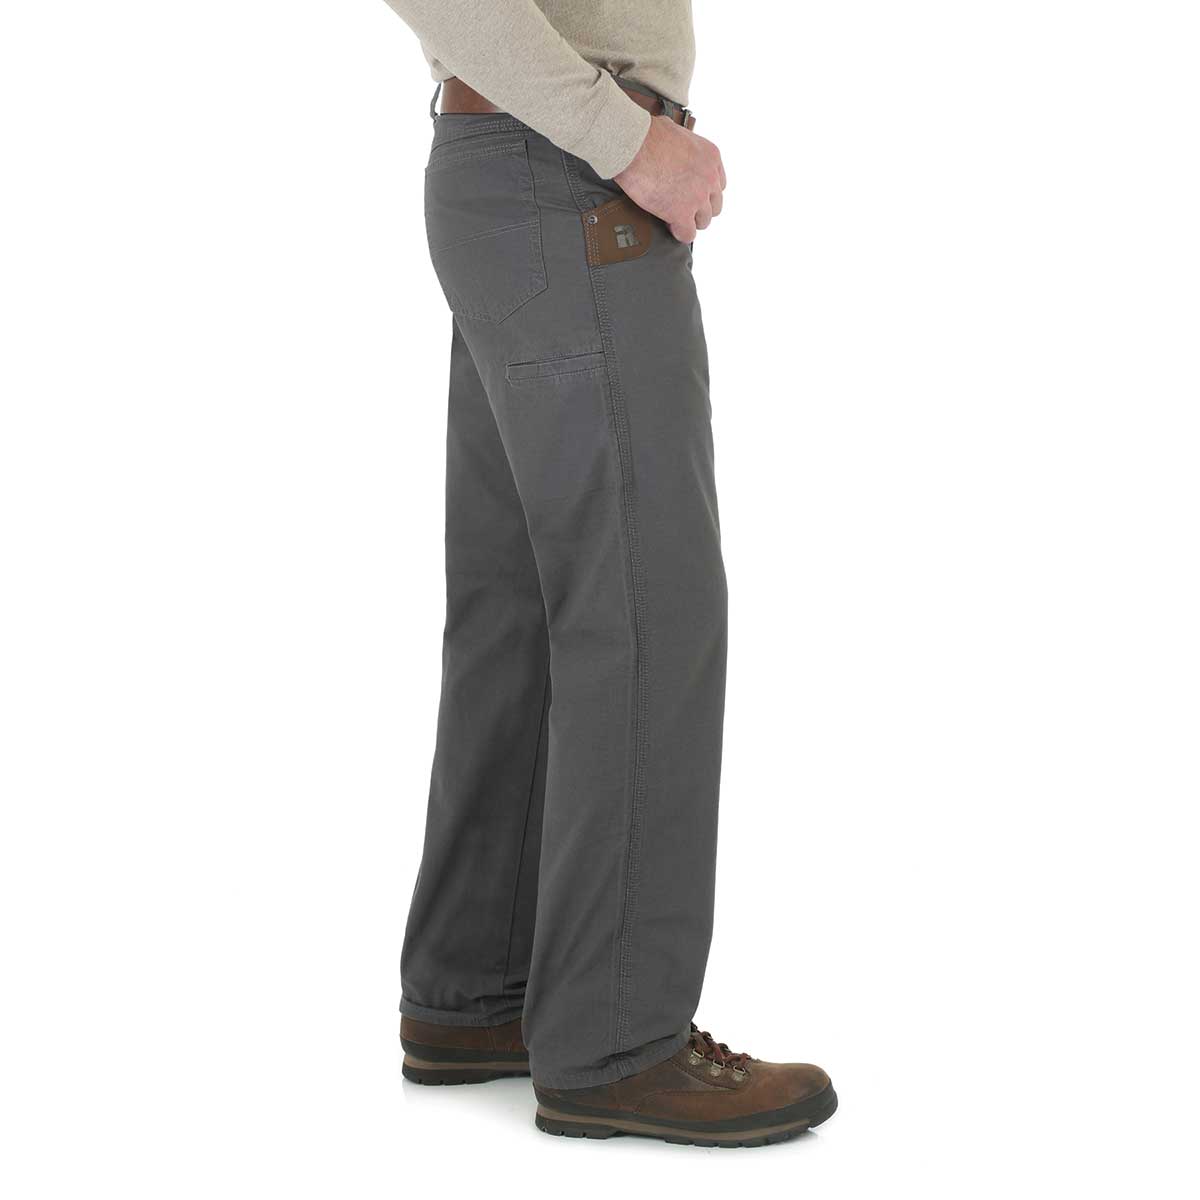 Wrangler Riggs Workwear Technician Pants